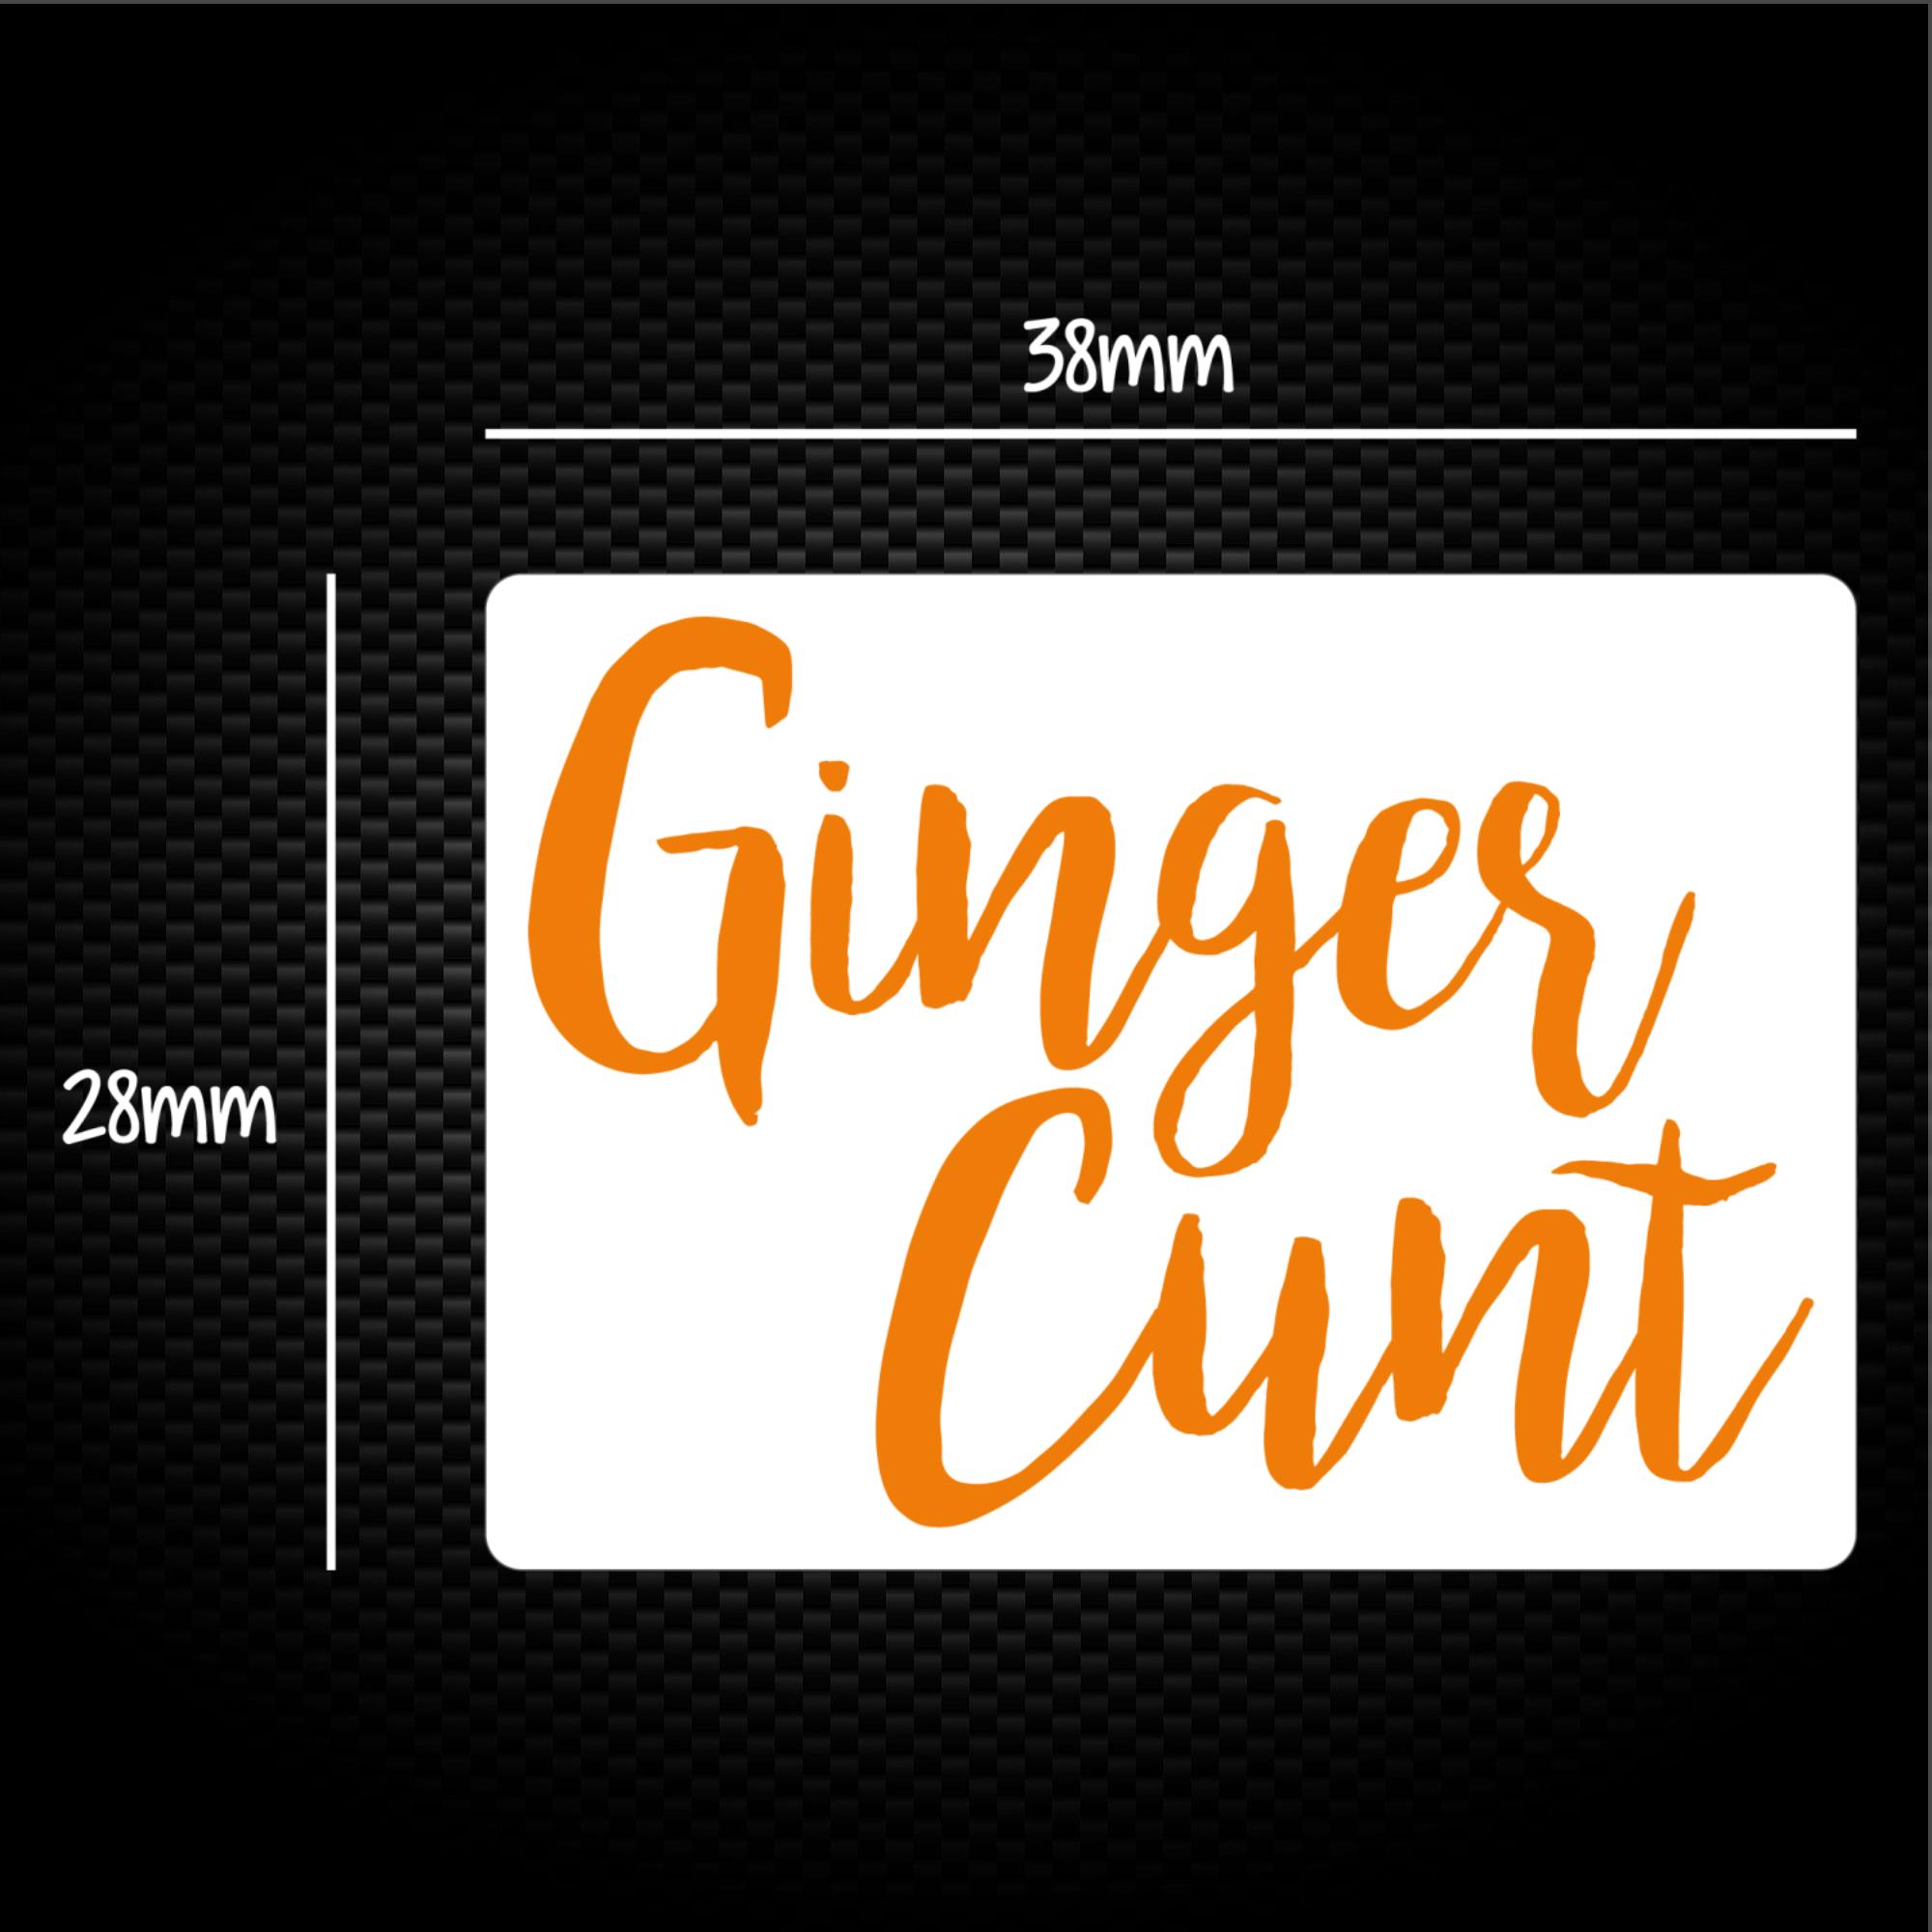 Ginger Cunt Sticker Pack Rude Stickers Slightly Disturbed